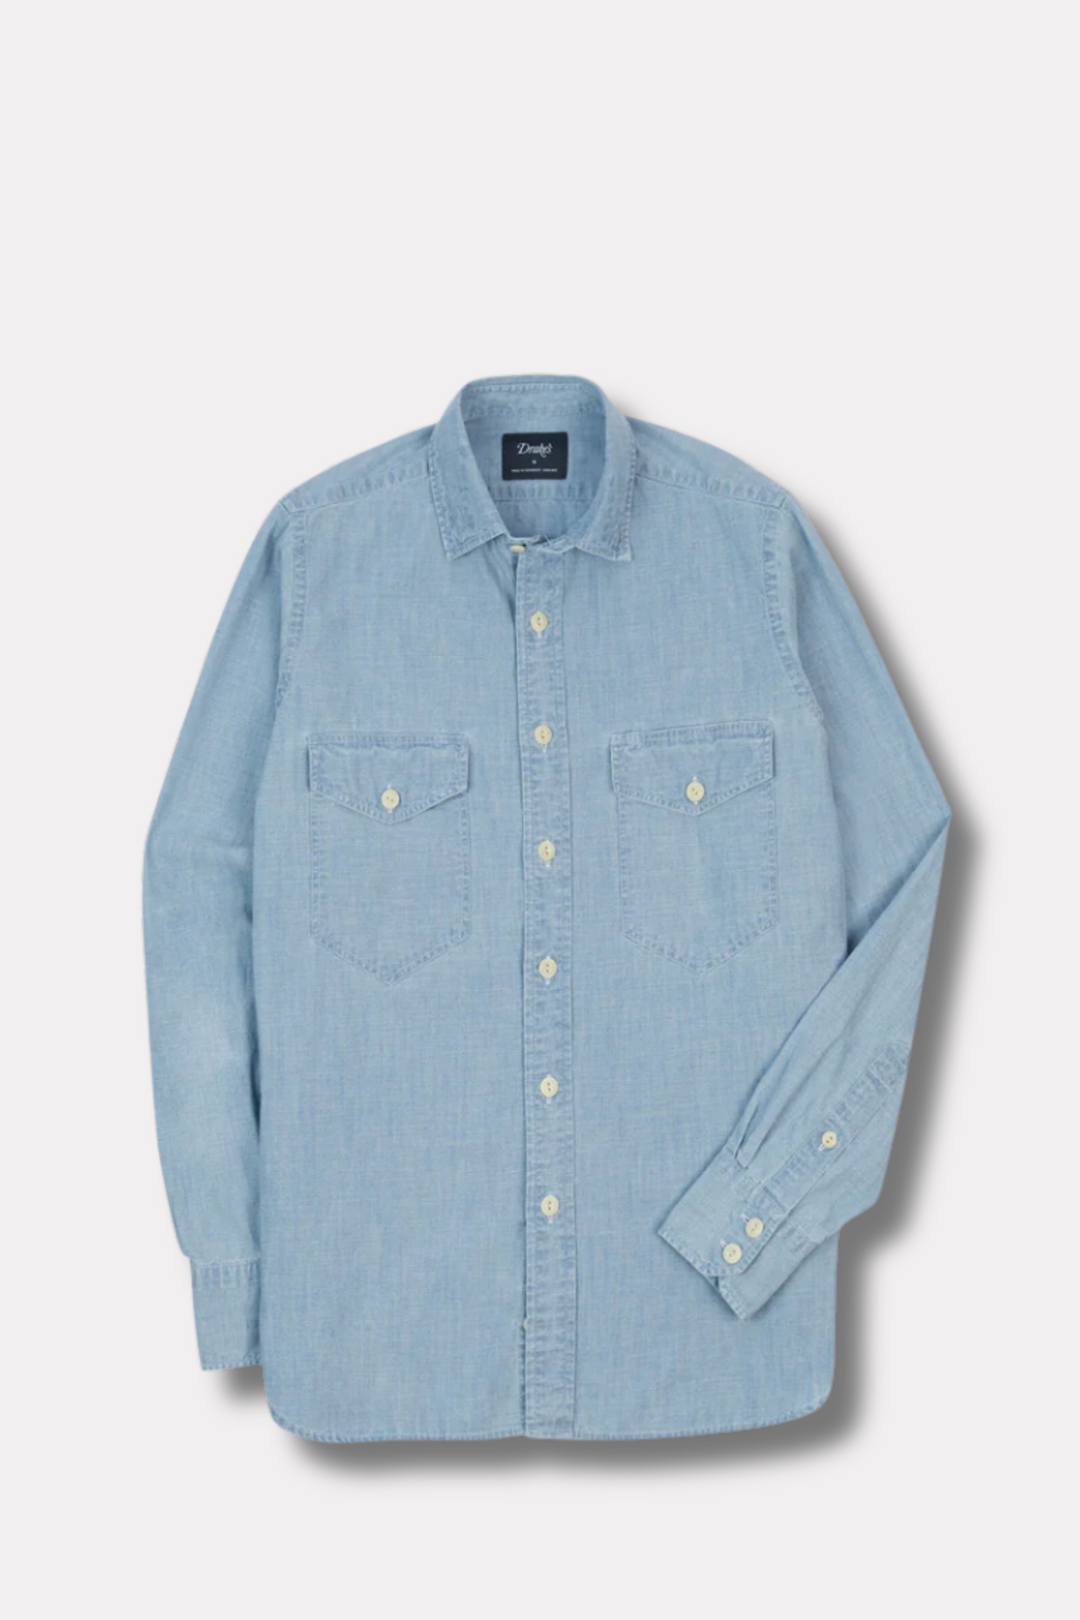 Cotton Chambray Two-Pocket Work Shirt Blue